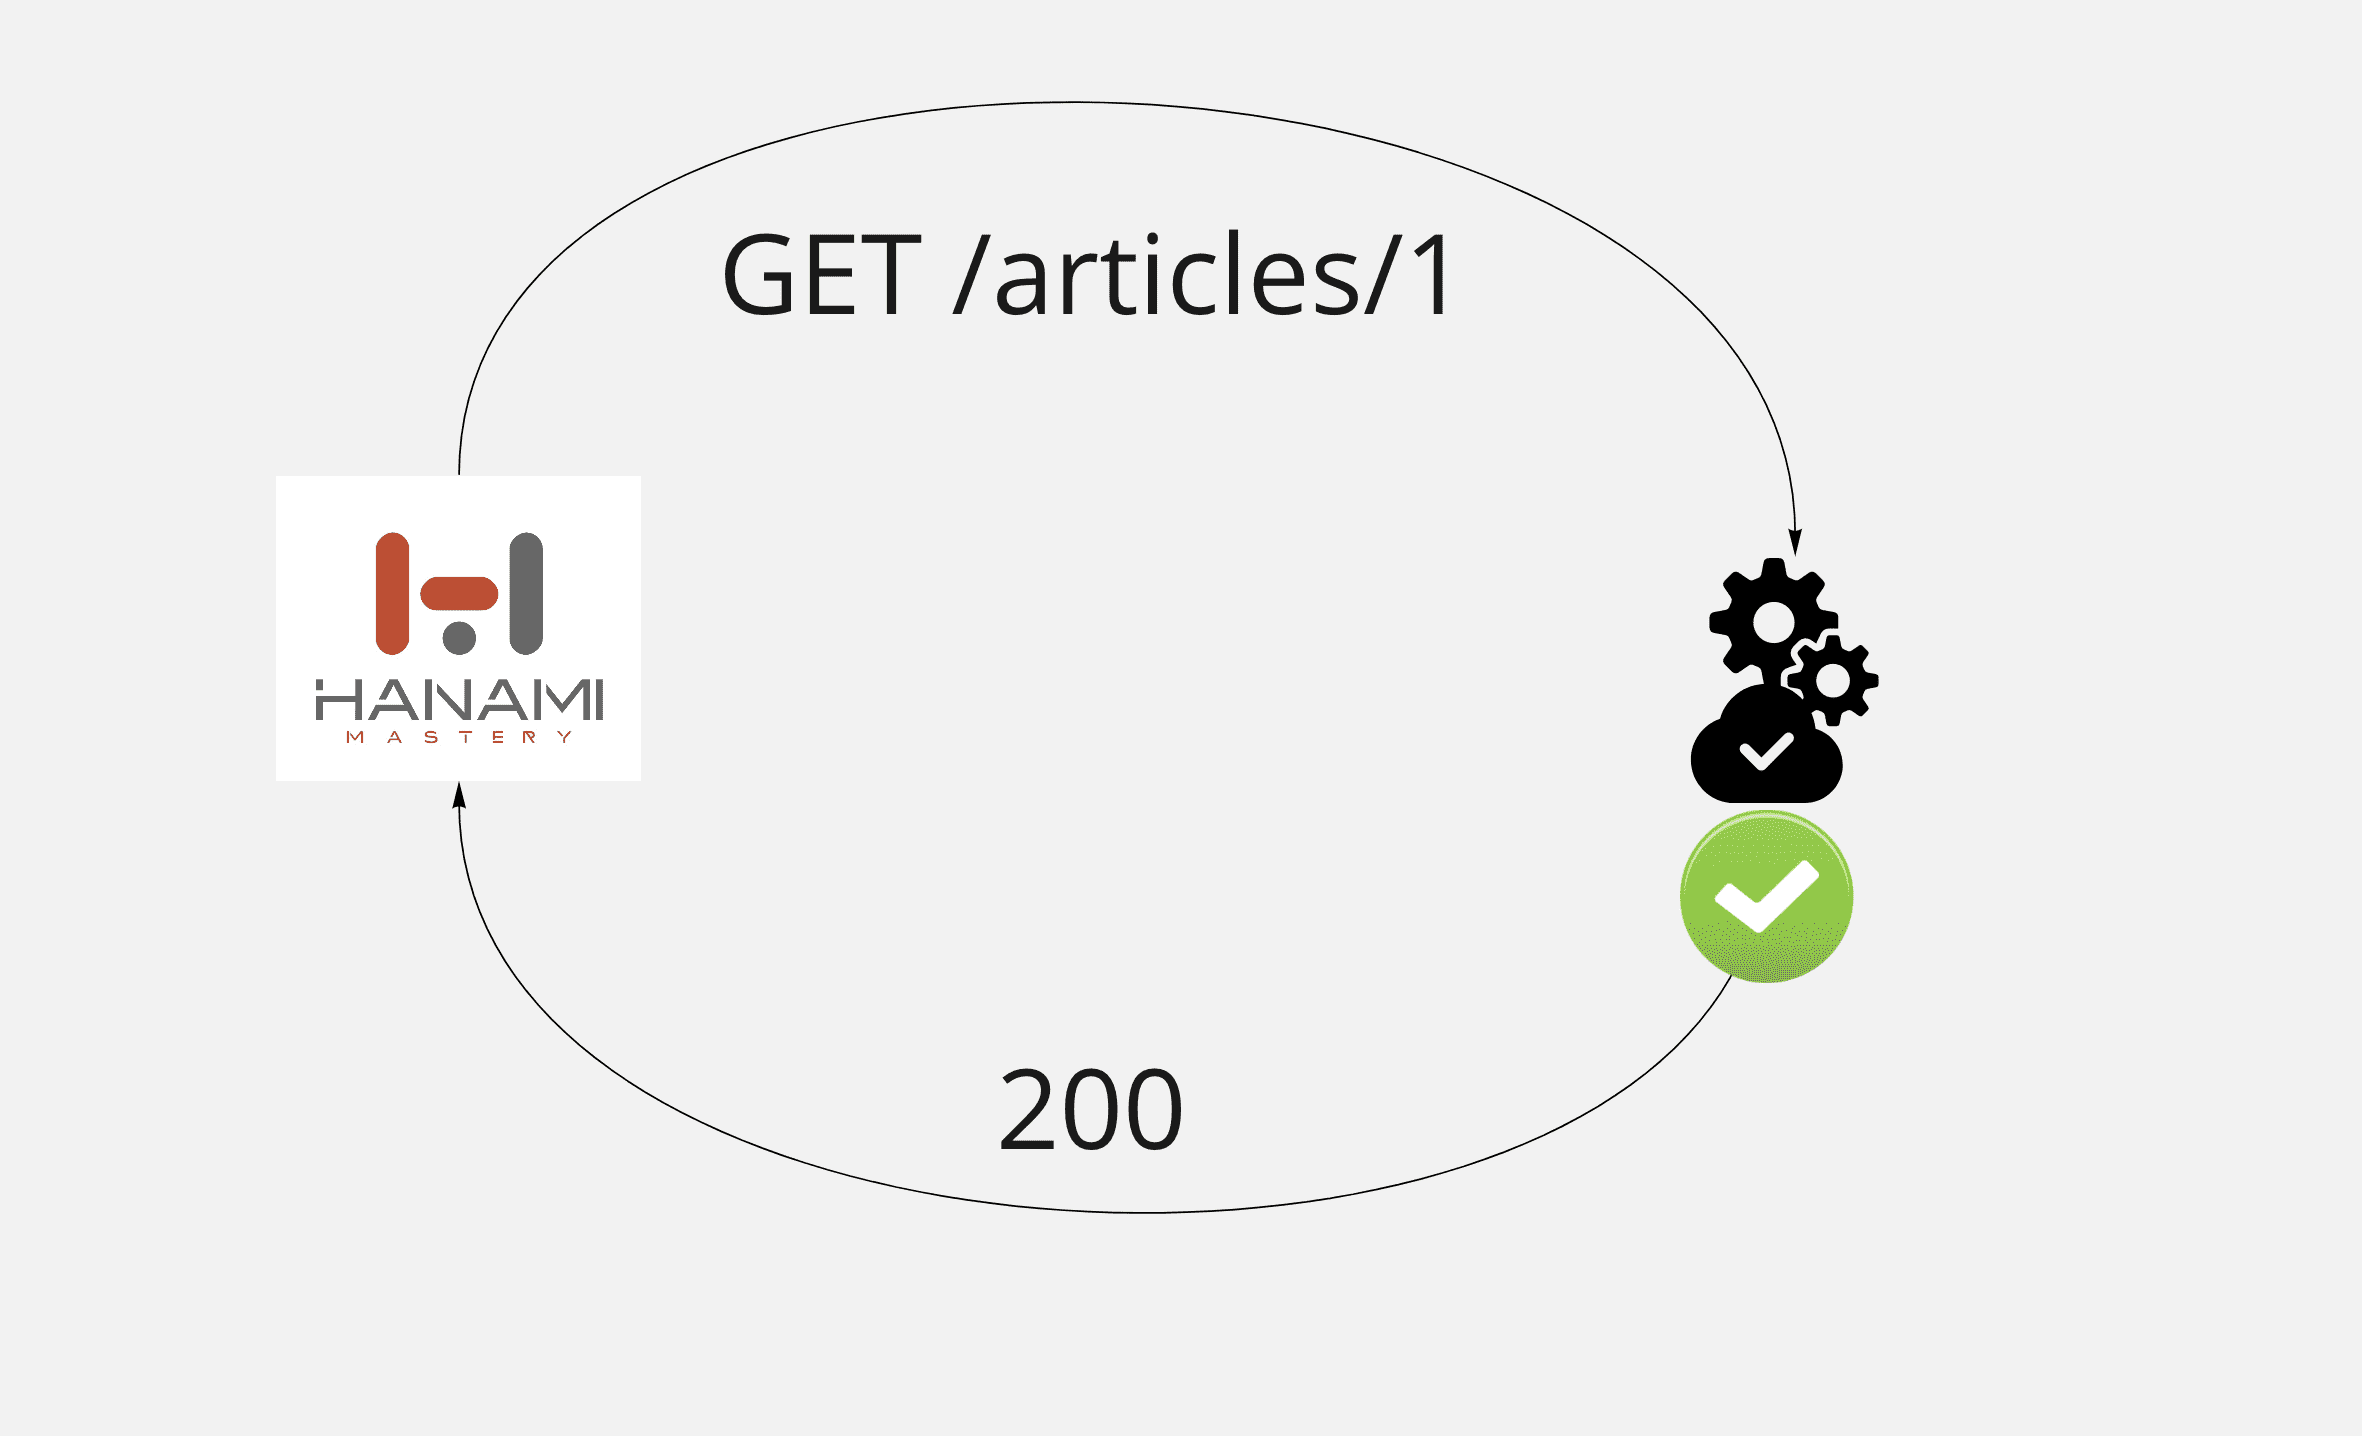 Successful (200) HTTP status code